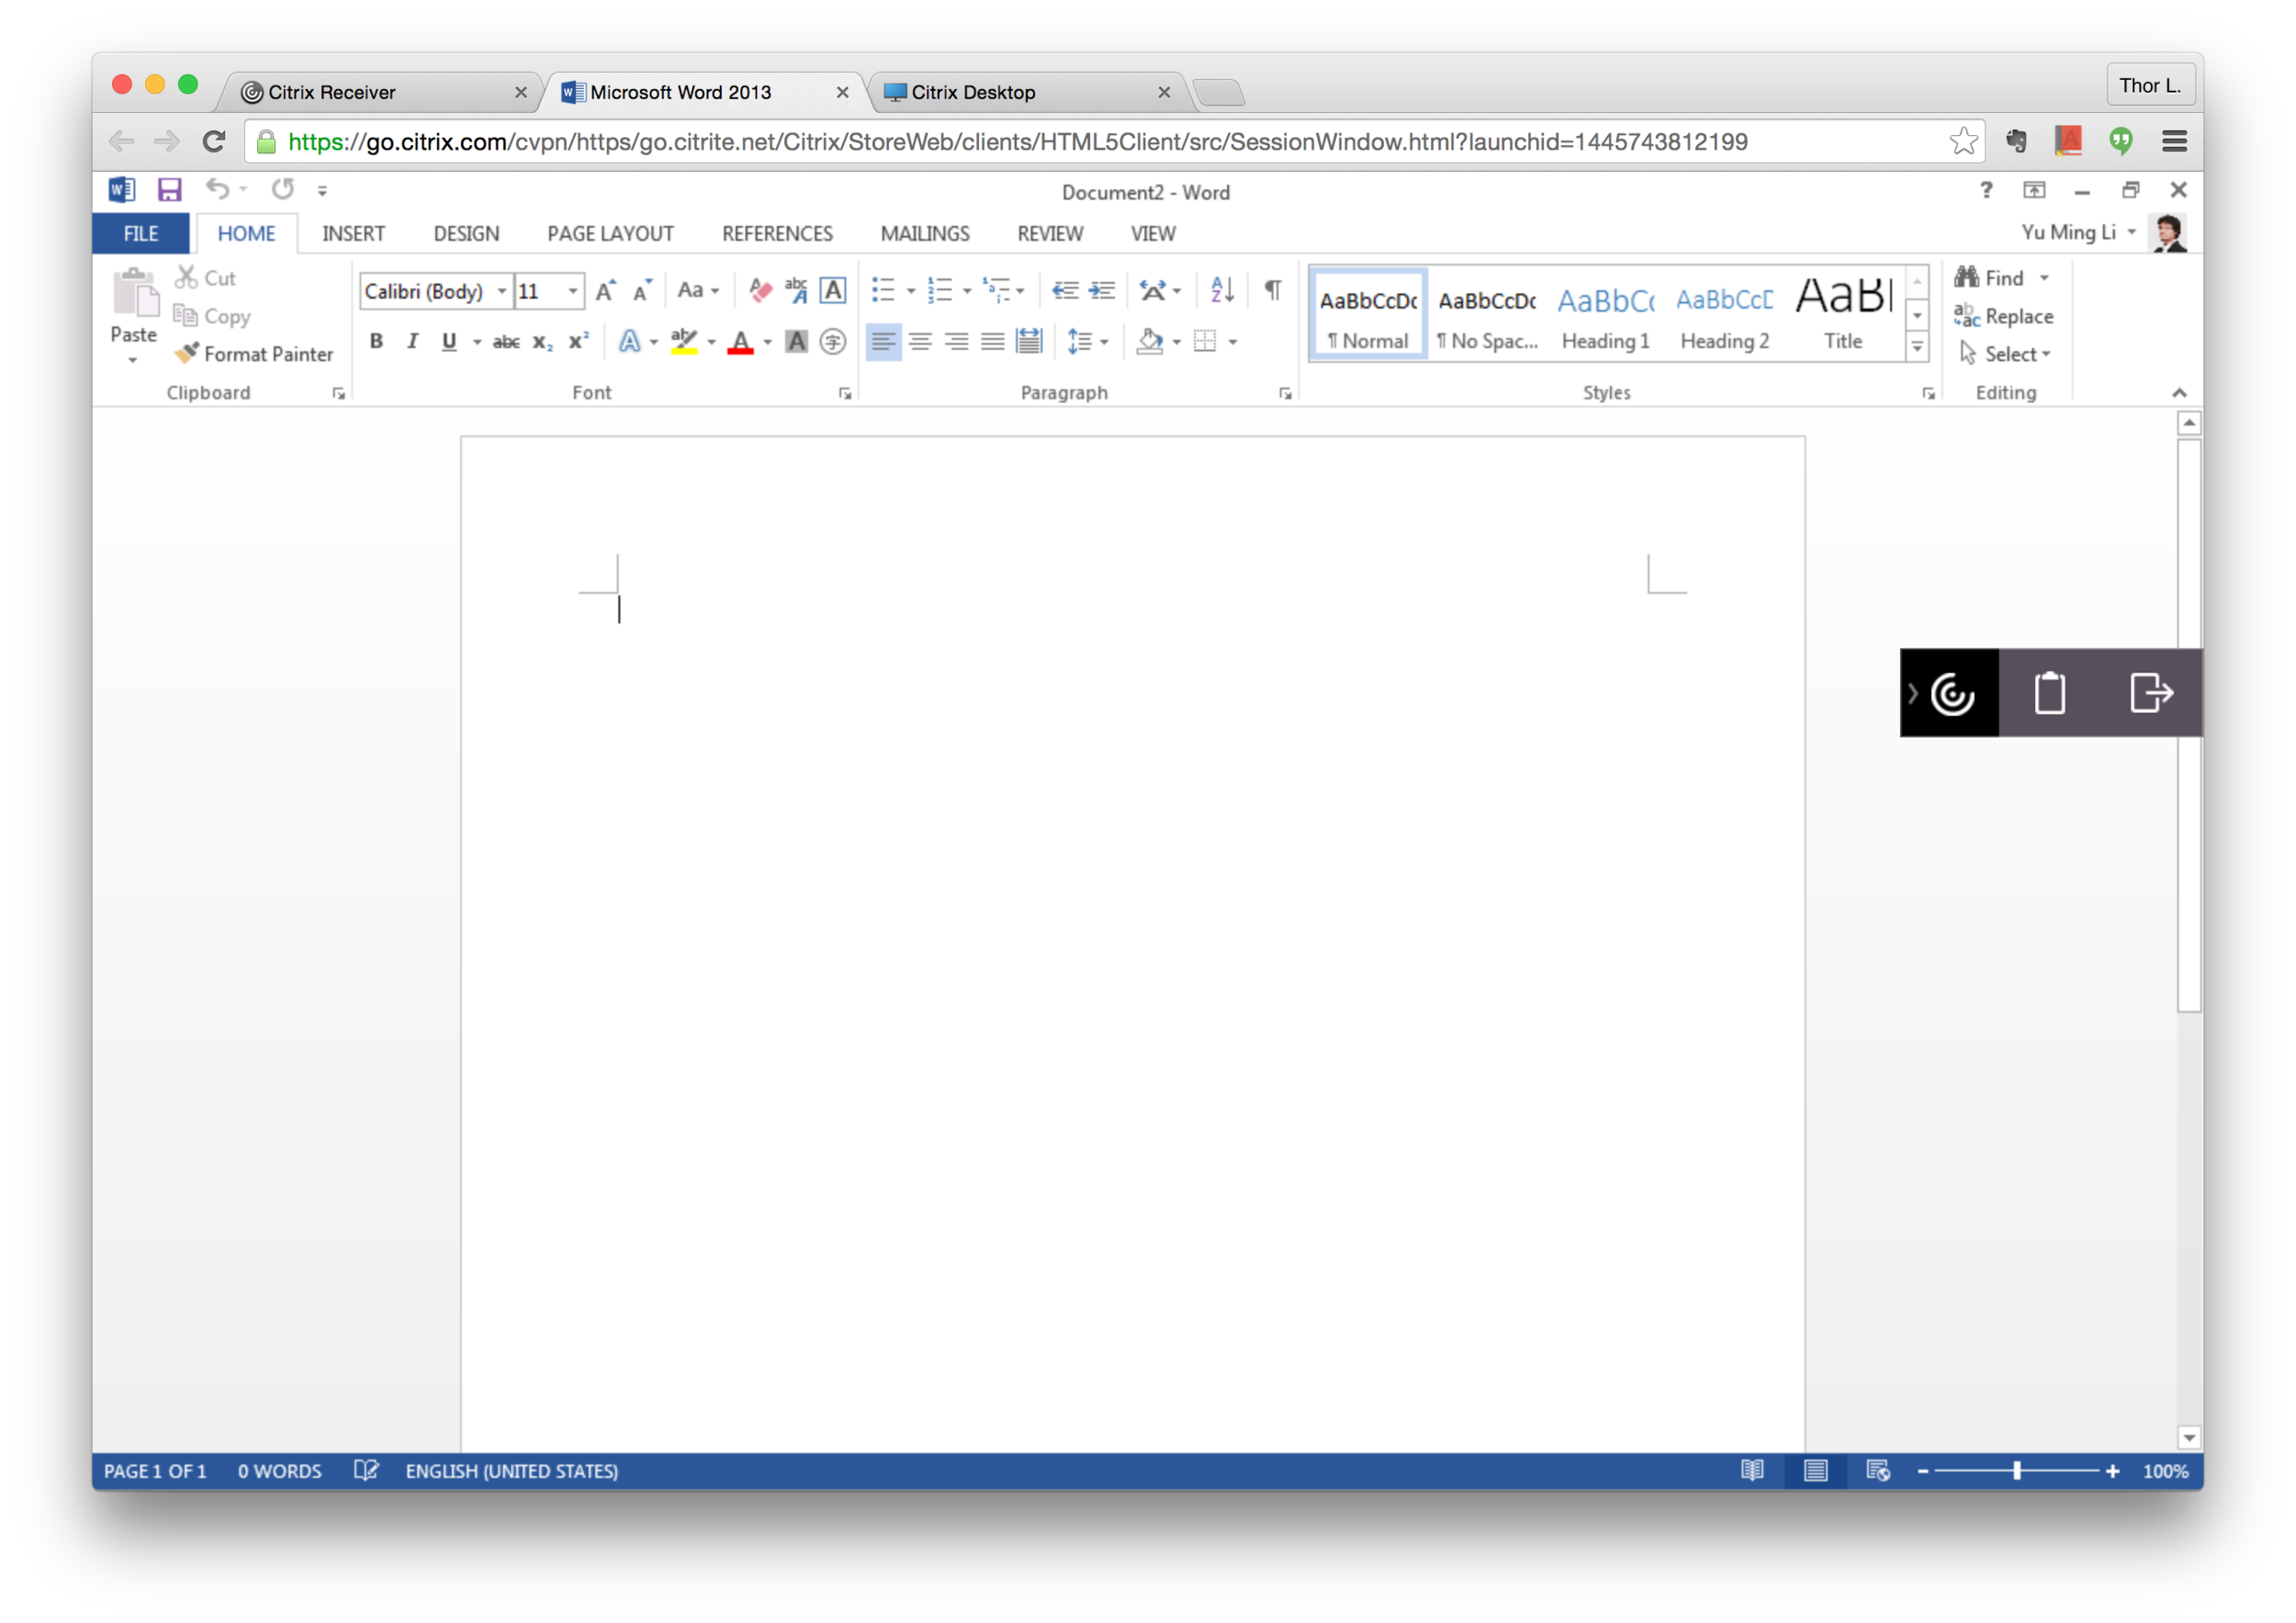  Virtual app (Microsoft Word 2013) on Chrome browser on Mac 